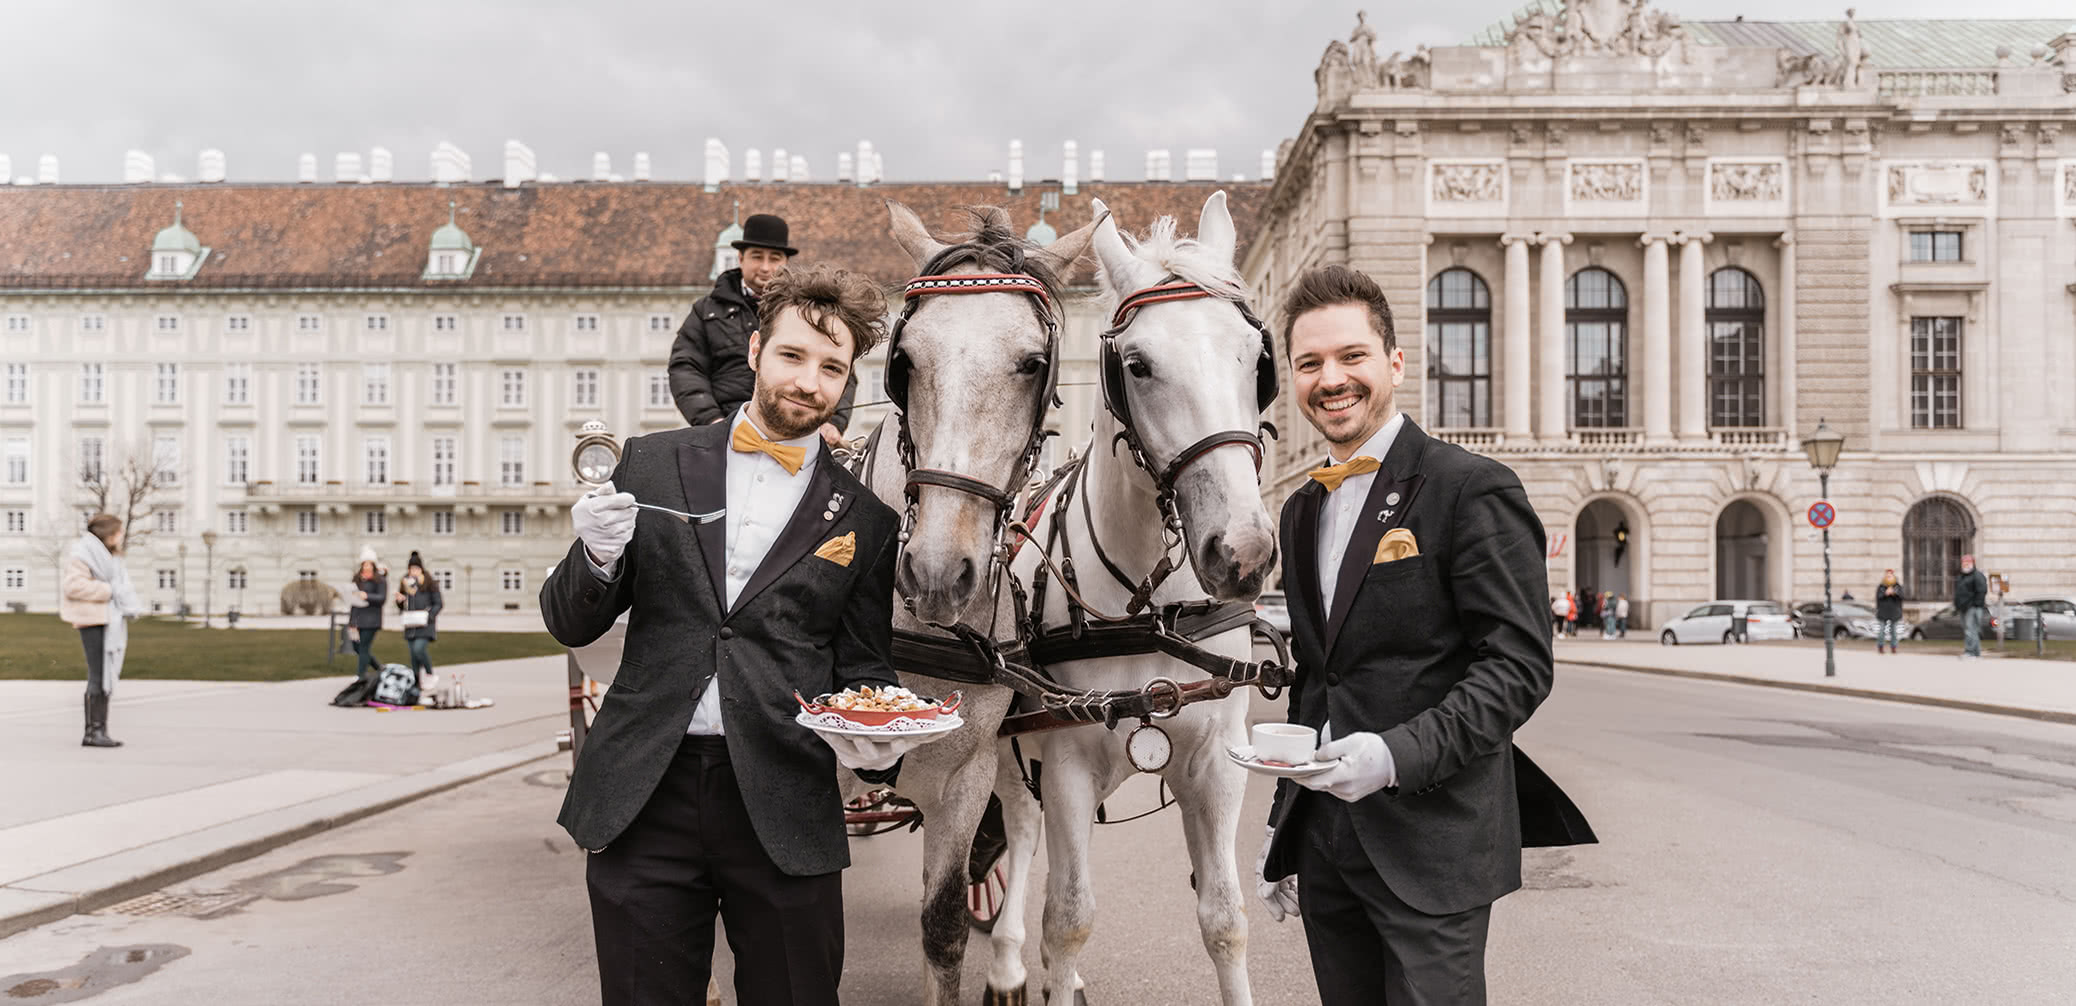 Top 10 Best Outdoor Dining Experiences in Vienna